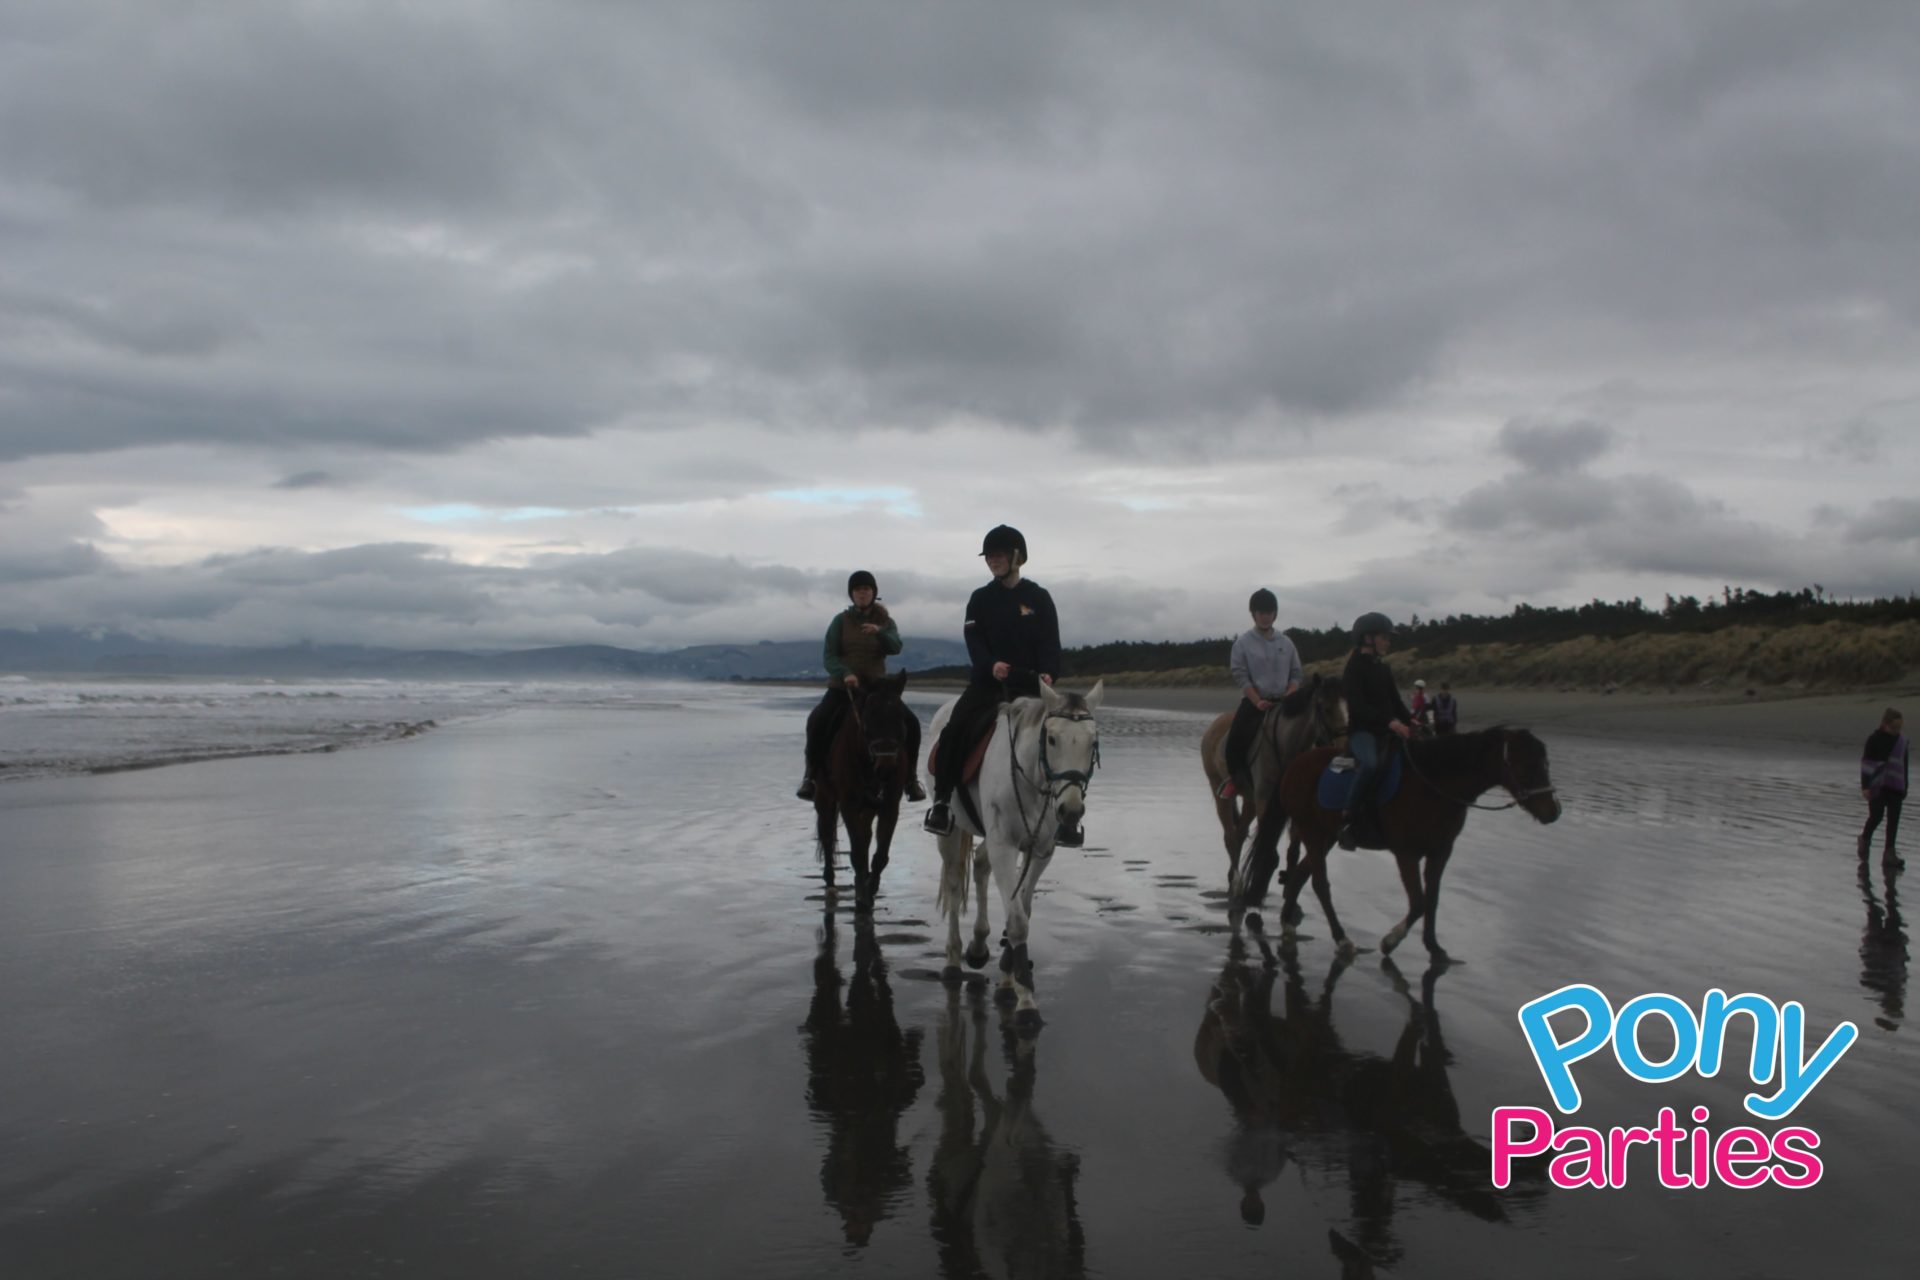 Image of Beach Horse/Pony Riding event